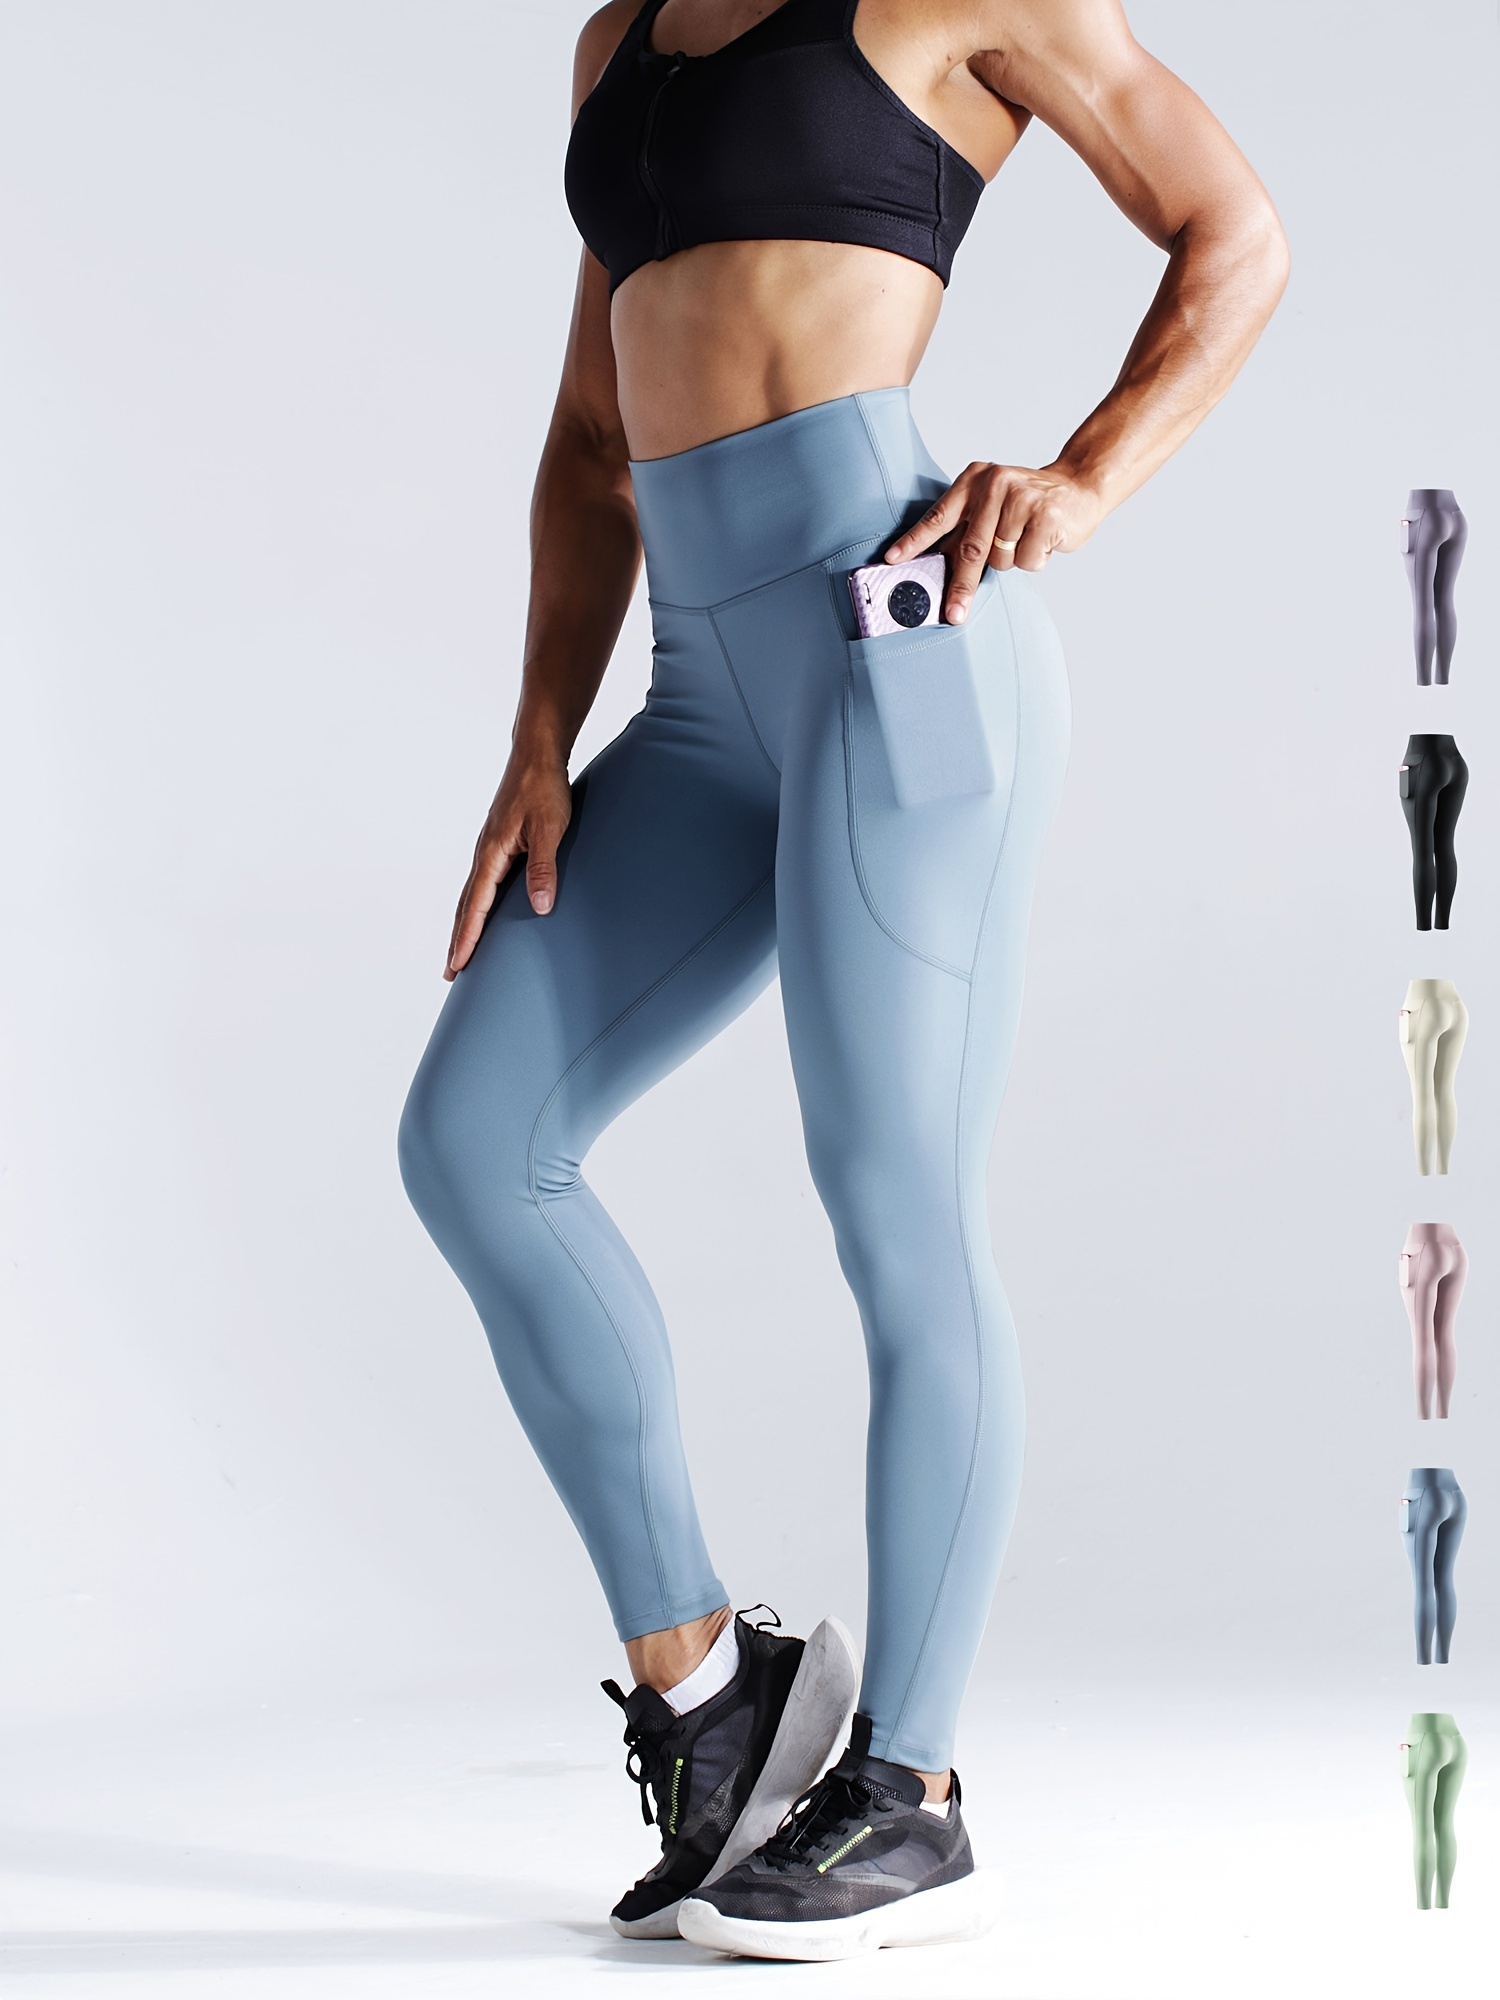 Sport Leggings Women Yoga Pants Workout Fitness Clothing Jogging